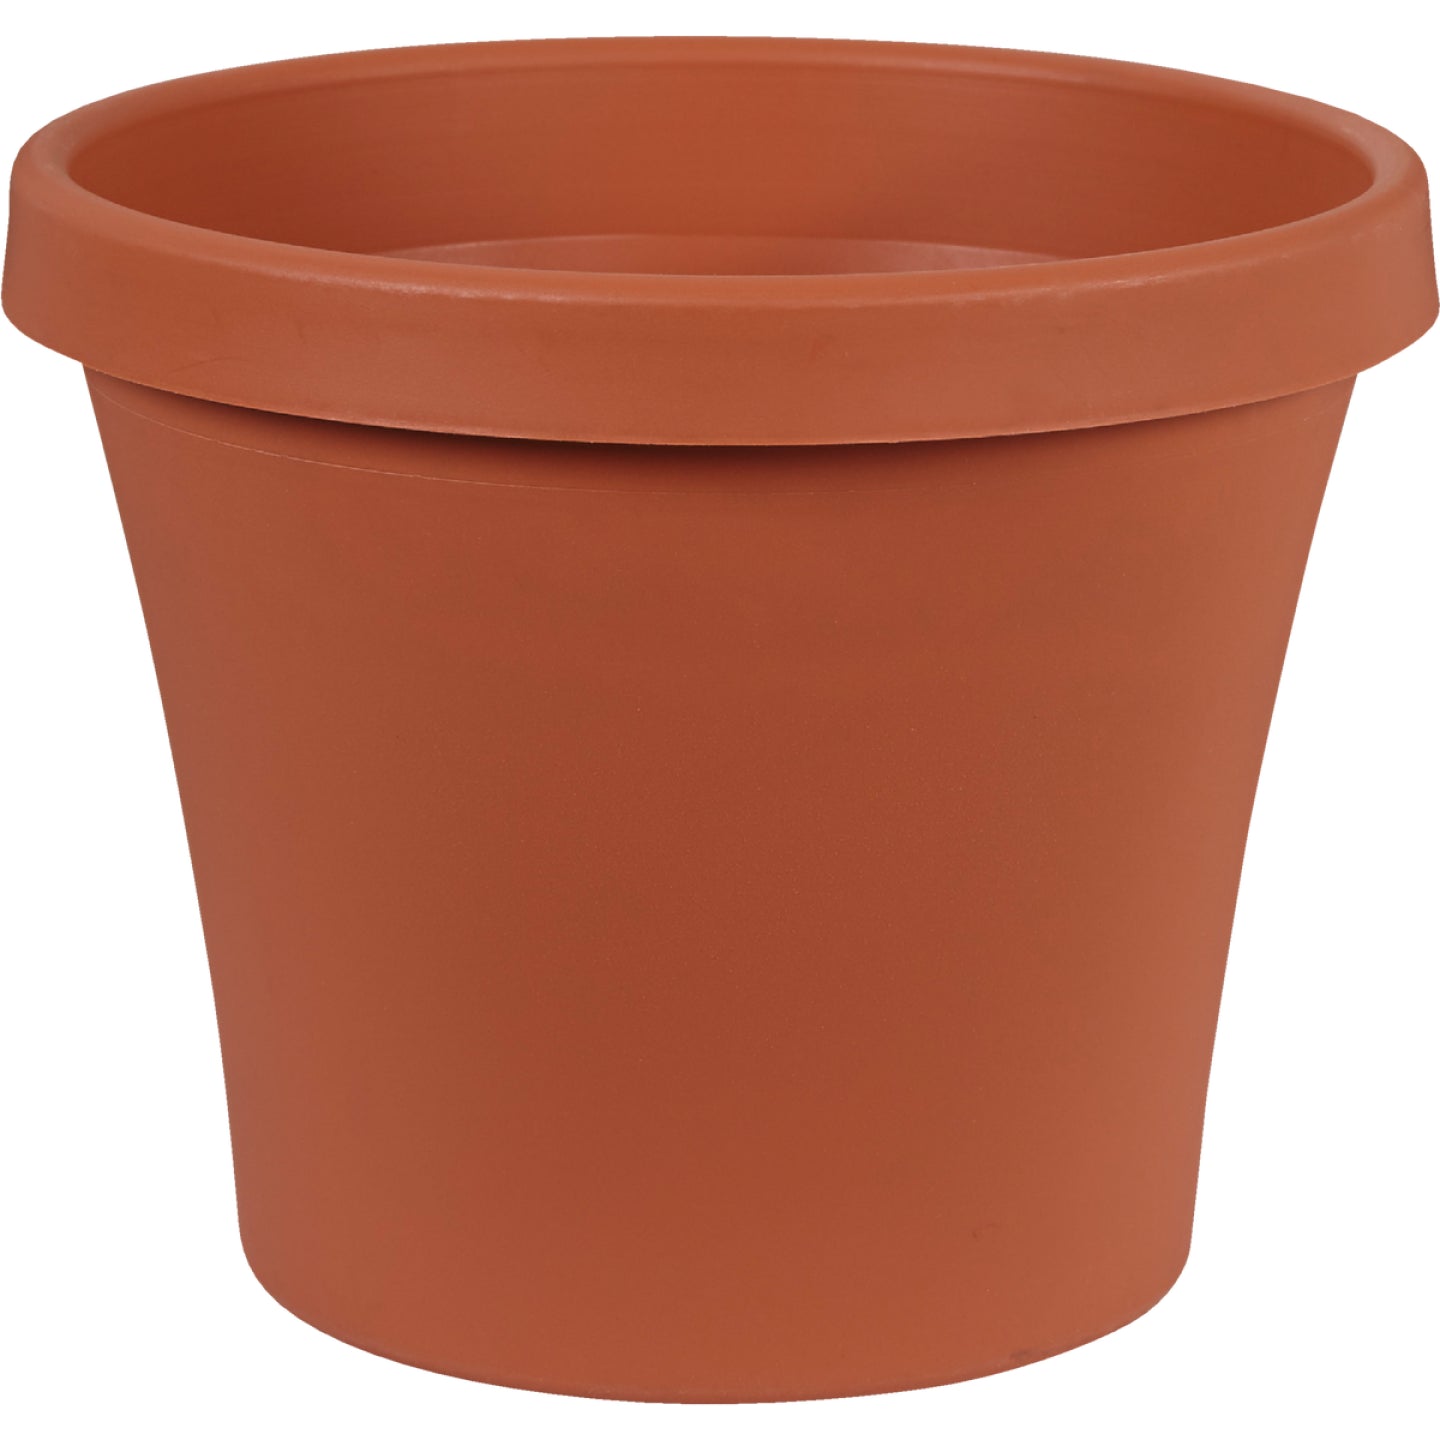 Bloem, Bloem 12 In. Dia. Terracotta Poly Classic Flower Pot